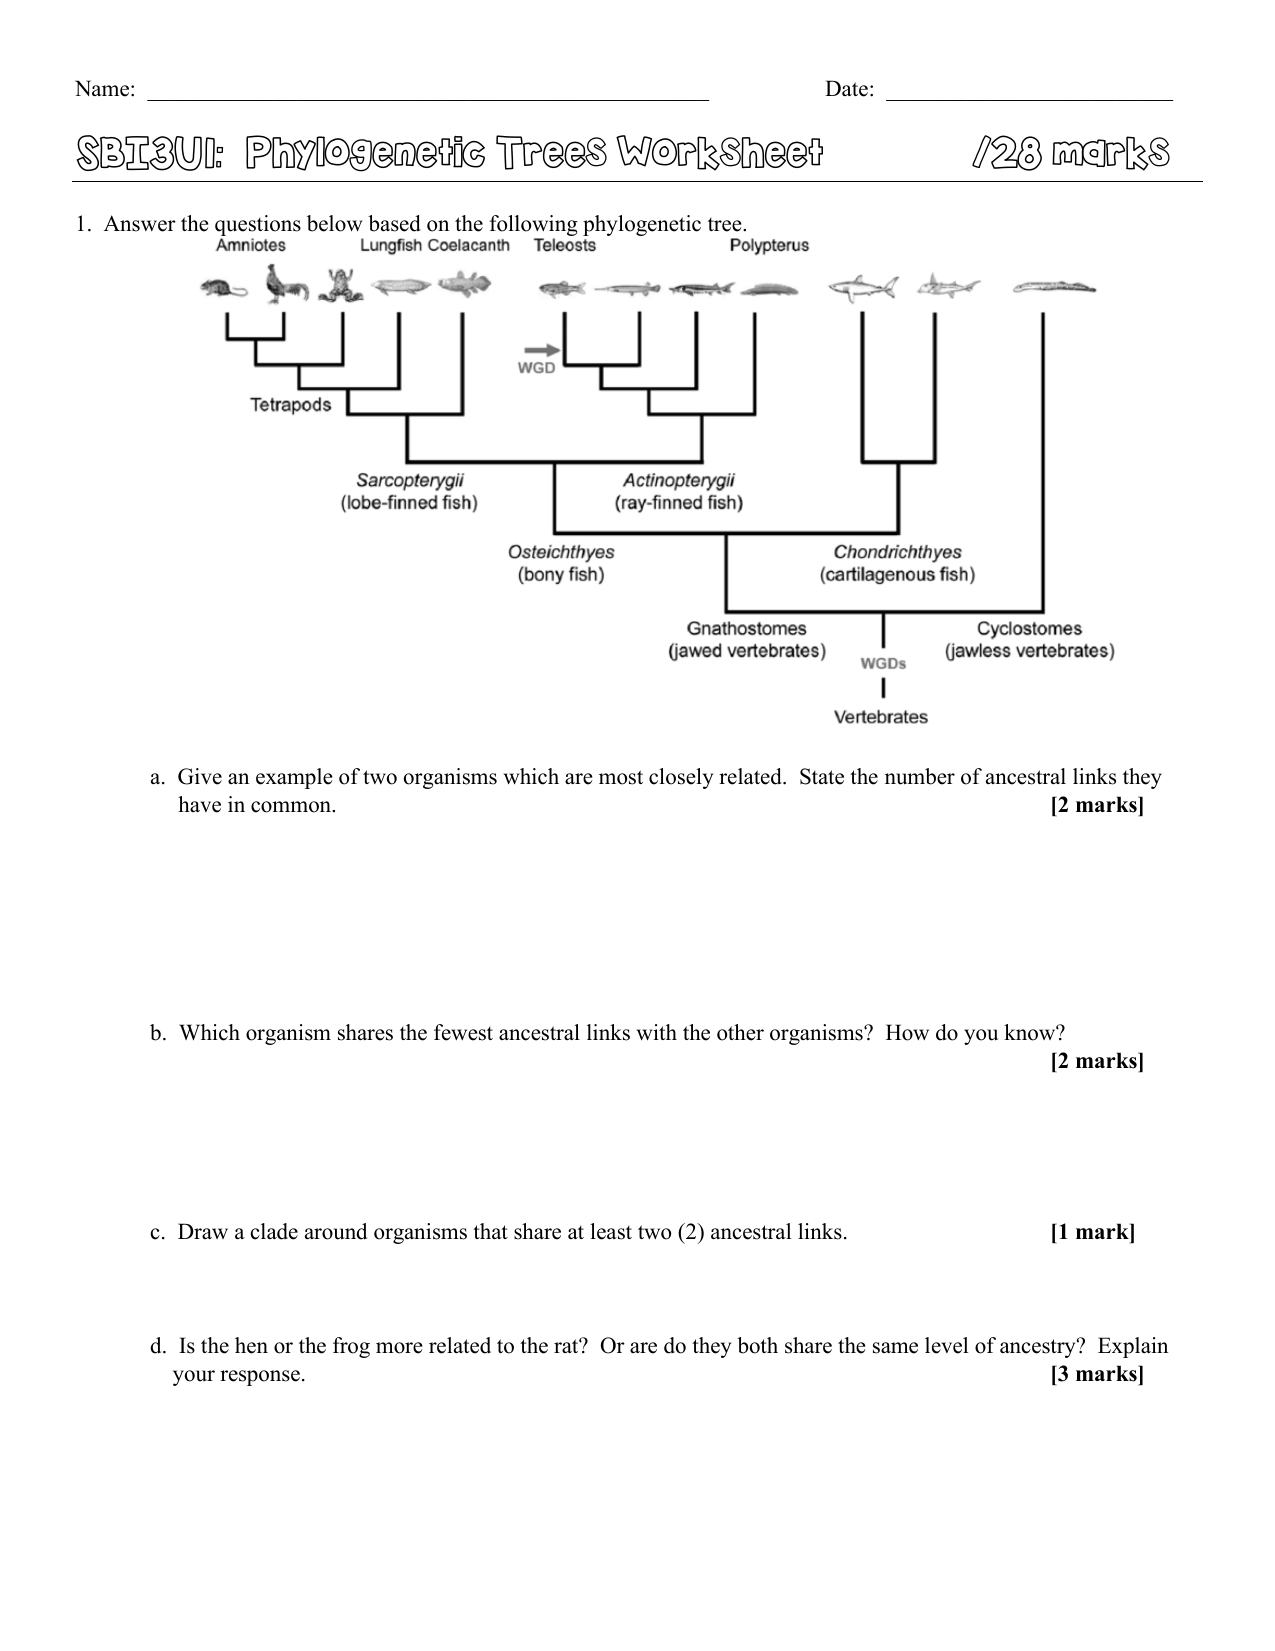 phylogenetic-tree-worksheet-answers-key